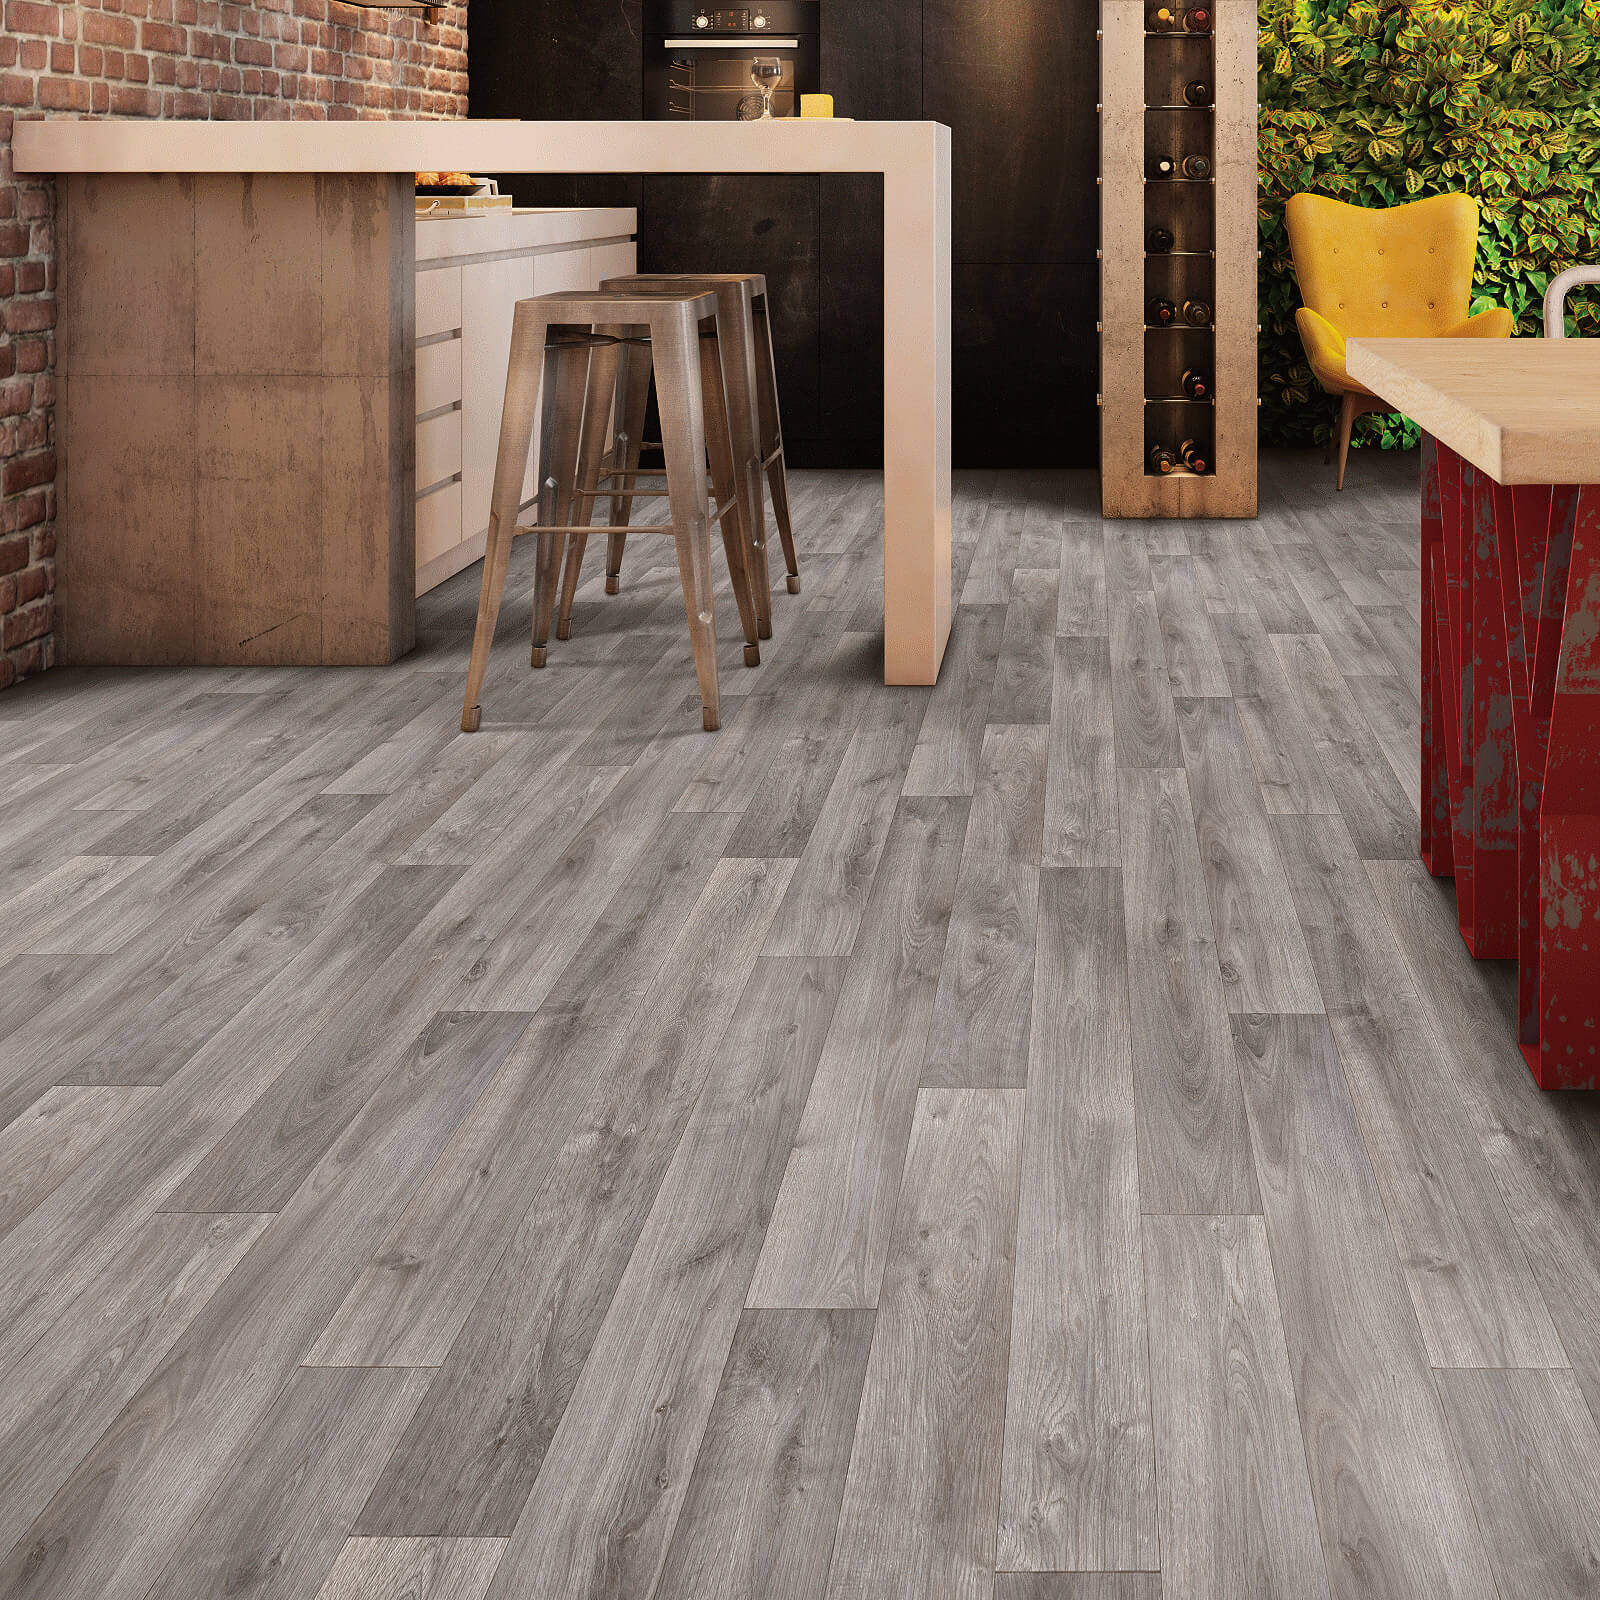 Vinyl plank flooring in workspace | Dehart Tile